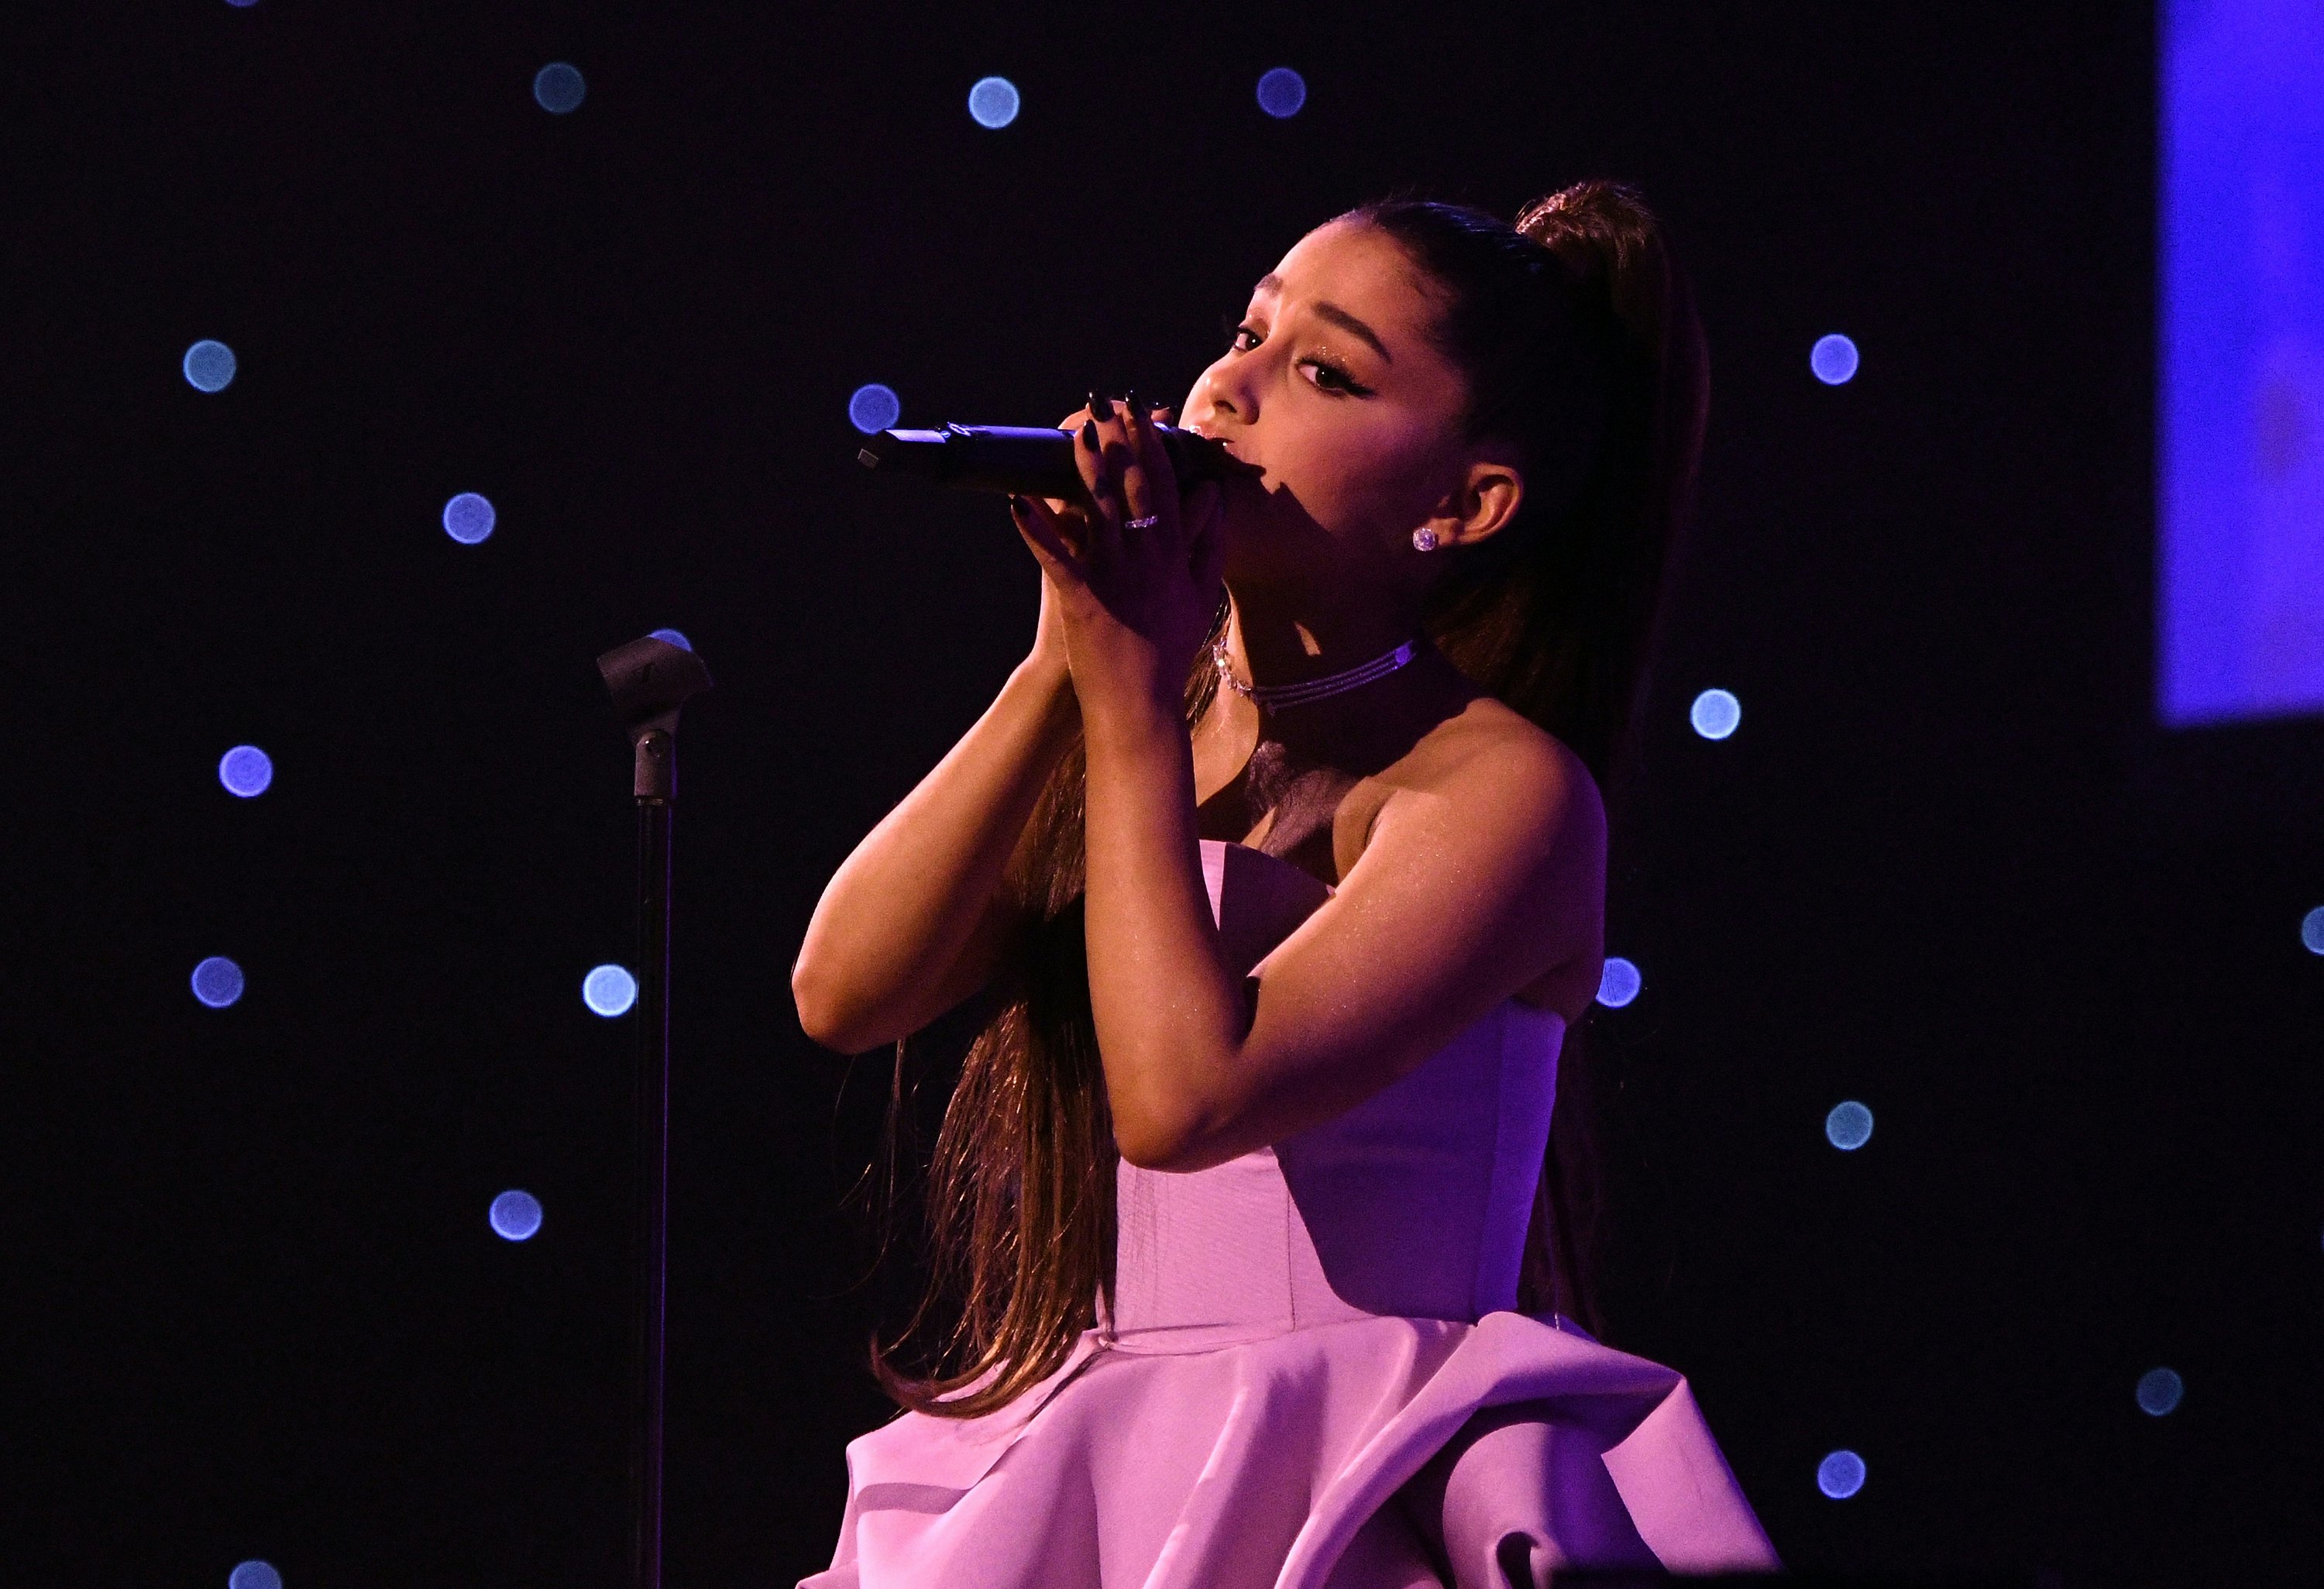 Ariana Grandes Sweetener Tour Setlist Is Missing Major